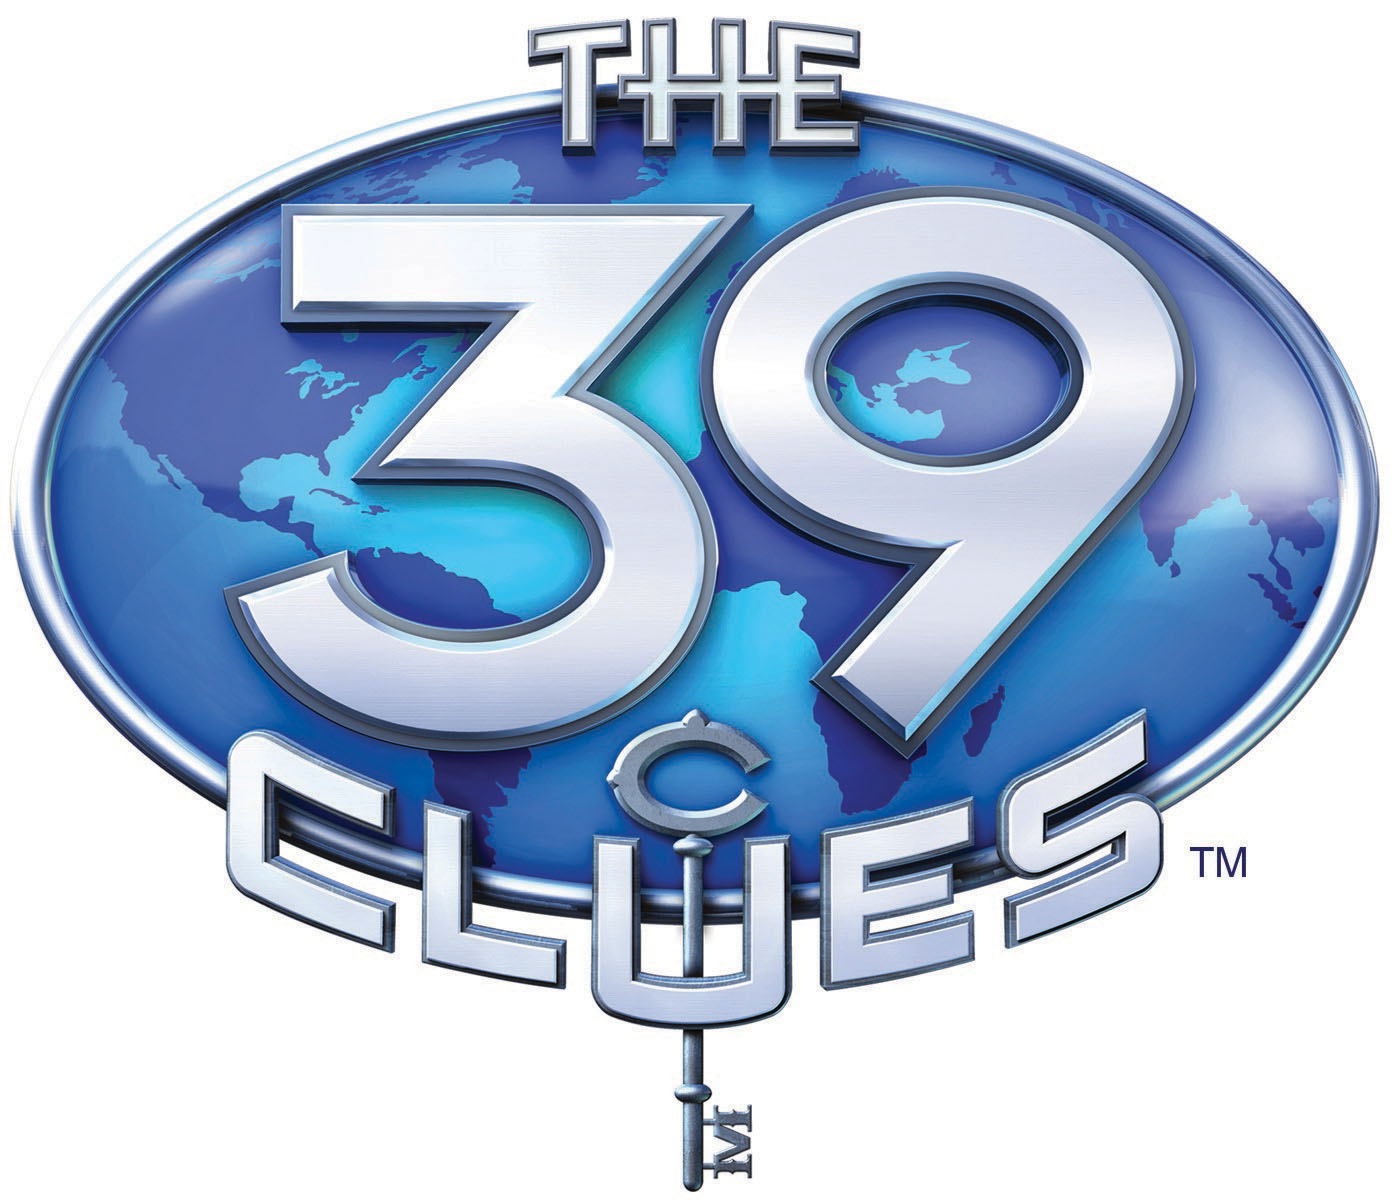 39Clues_logo.jpg